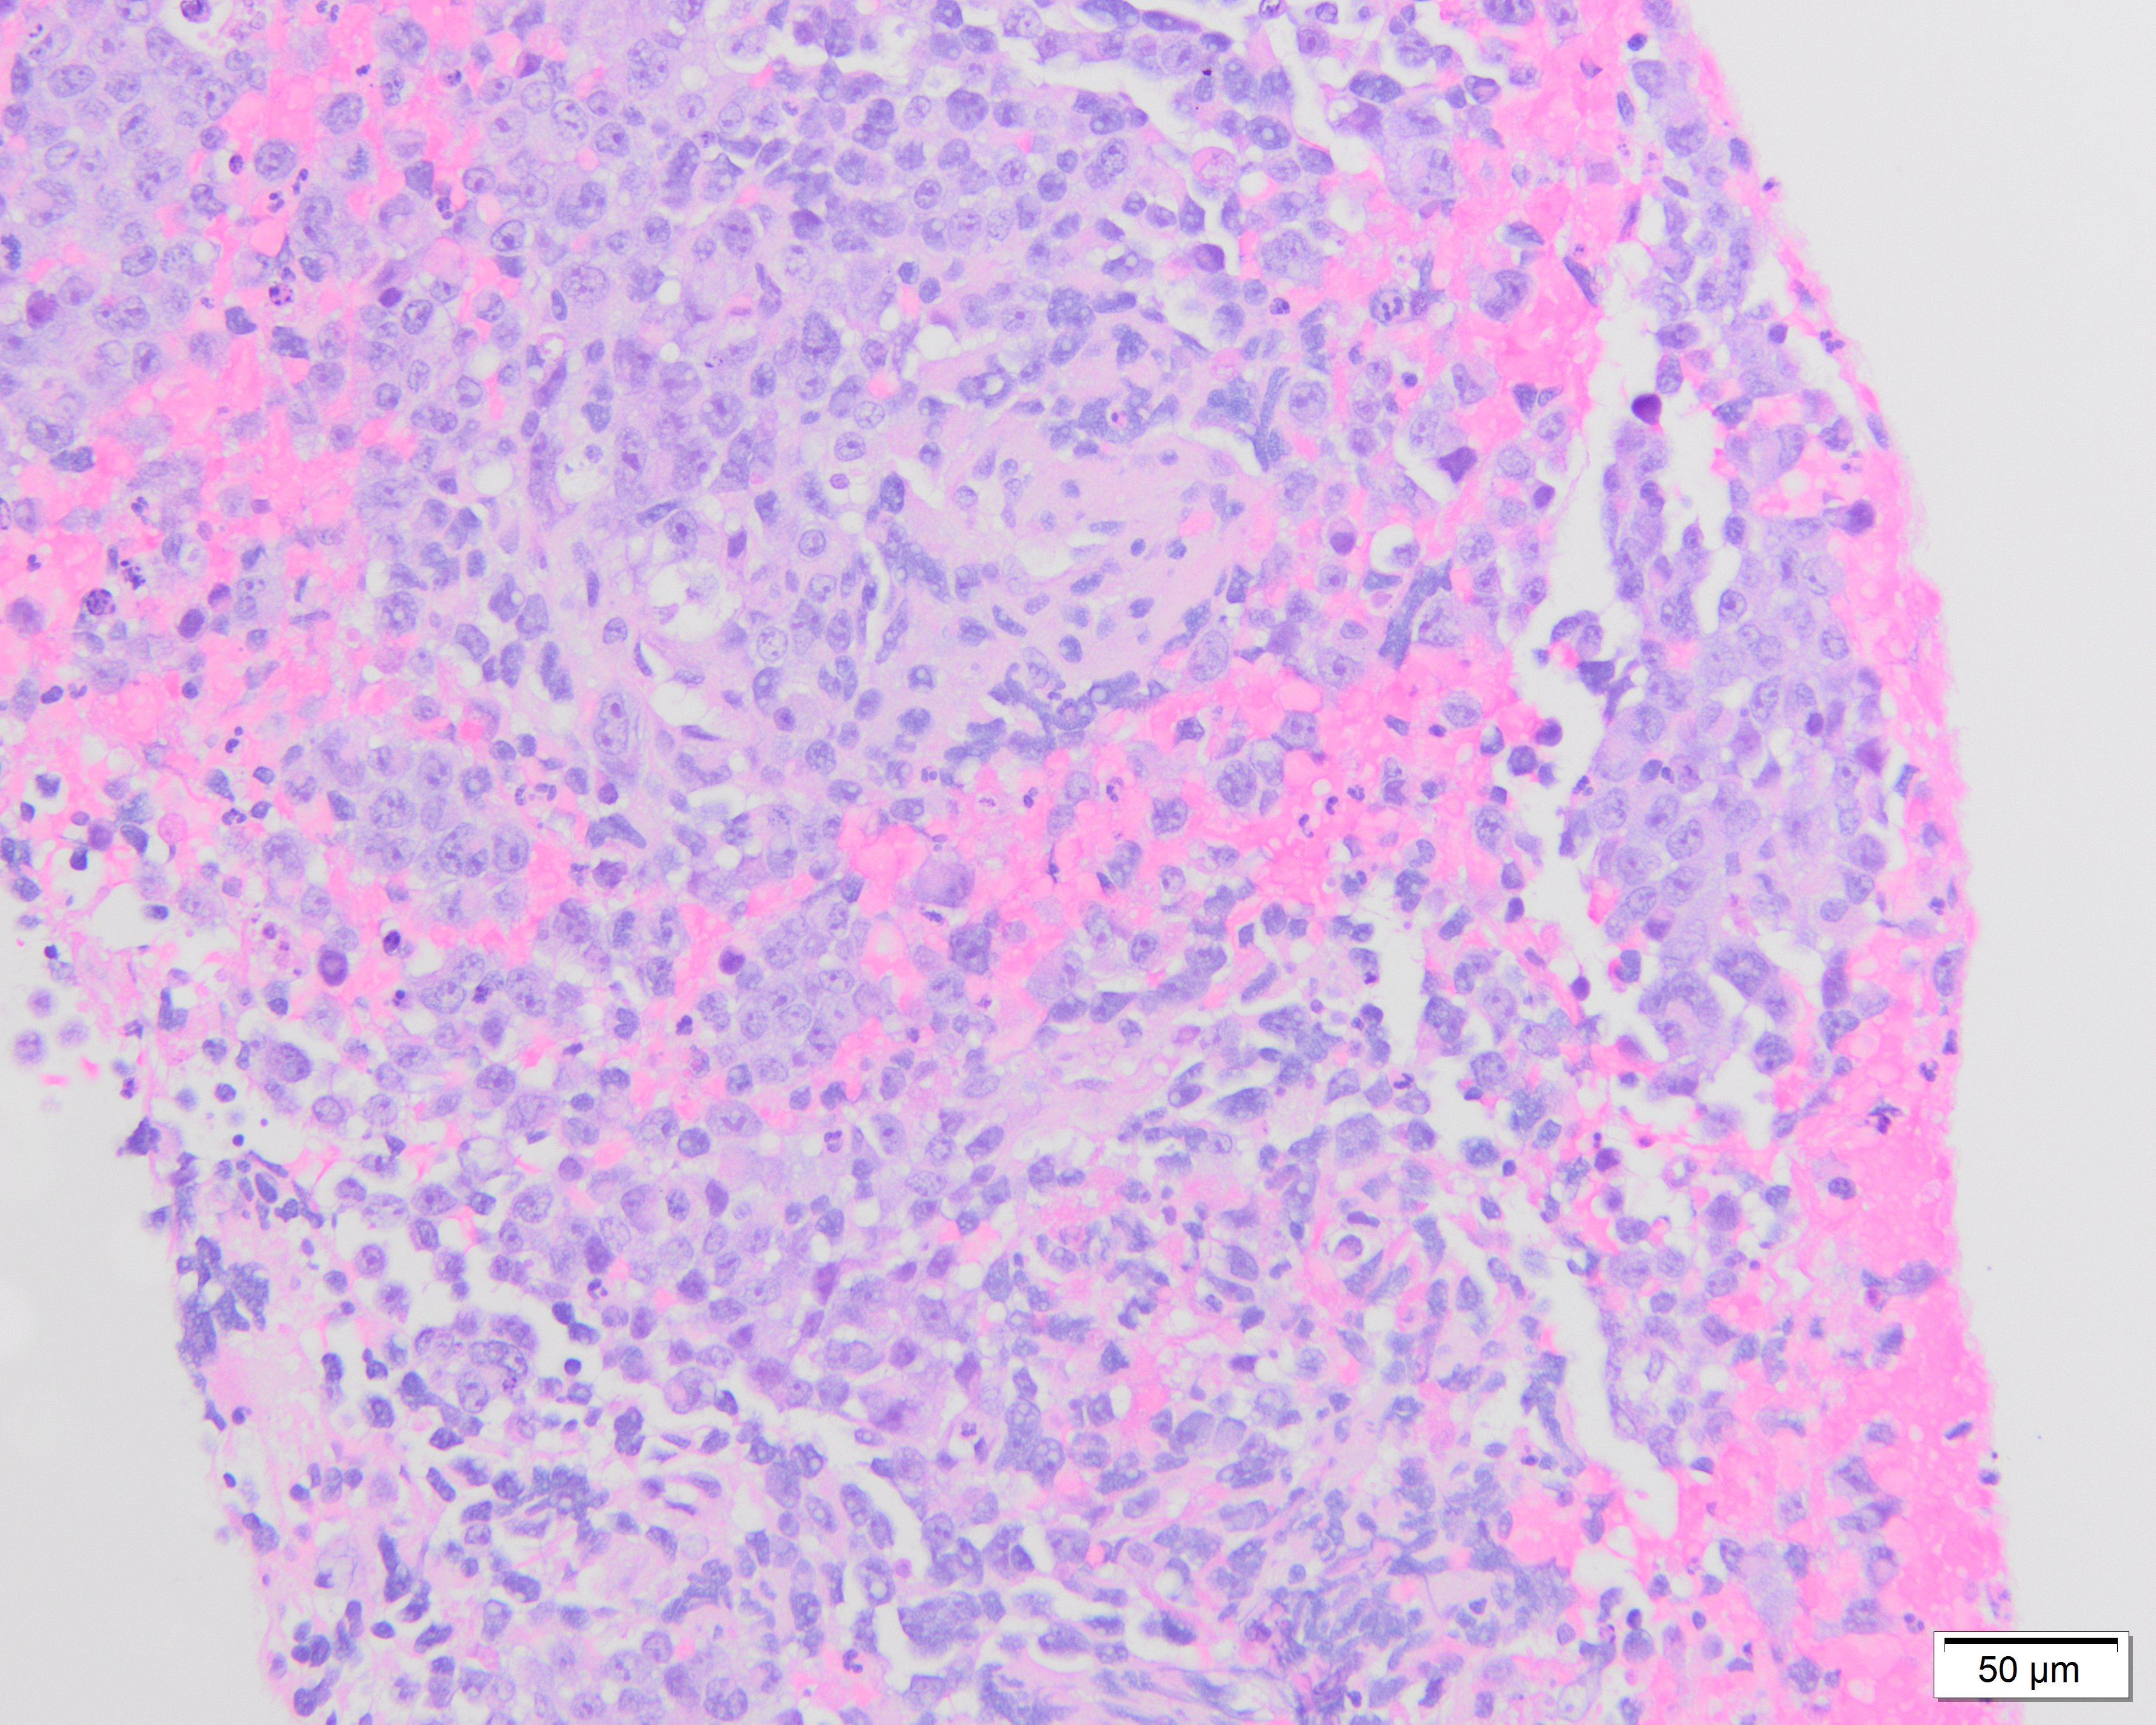 Figure 1: H&E lymph node biopsy 20x magnification